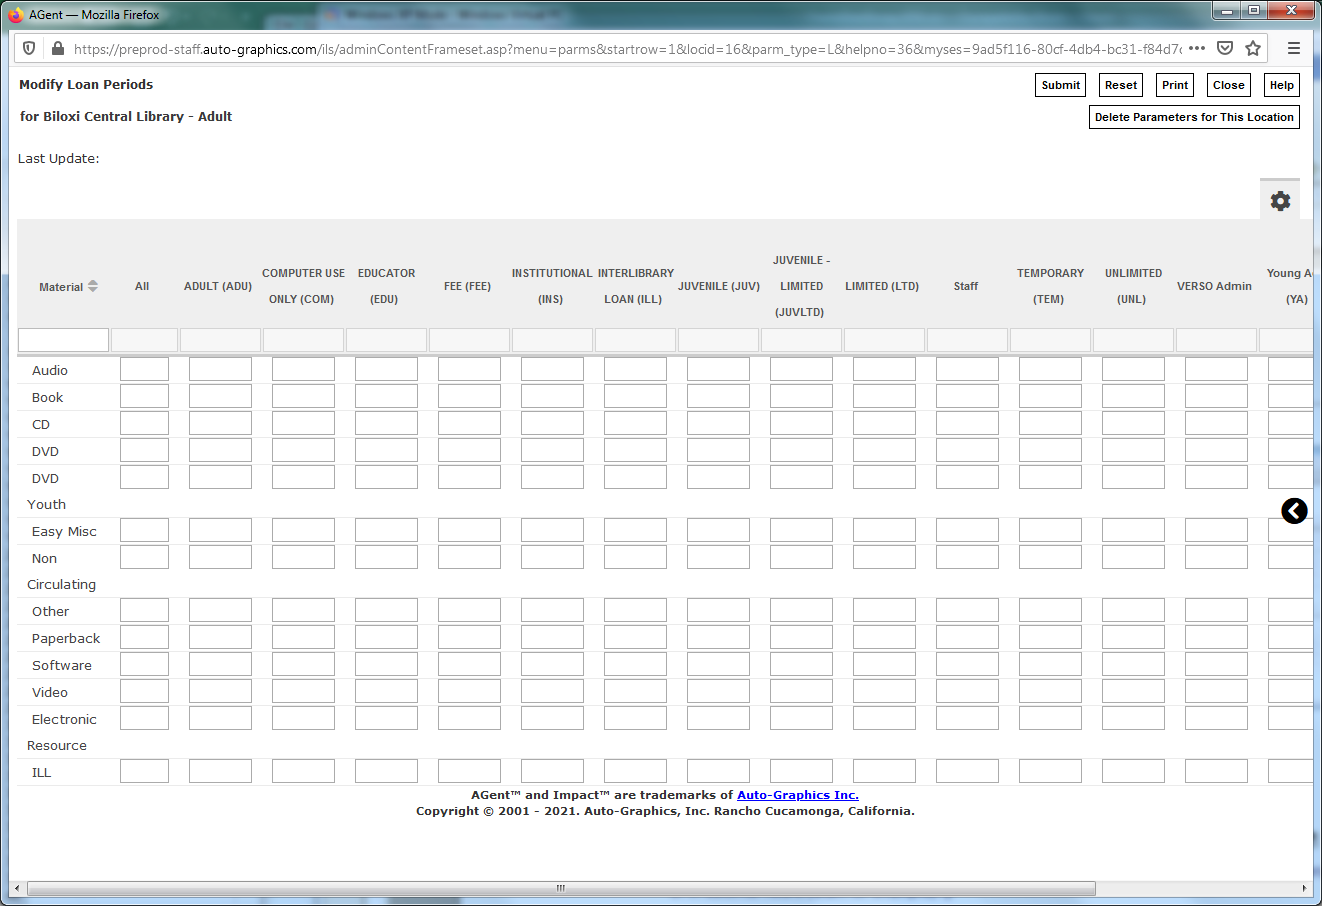 image of Modify Loan Periods Screen